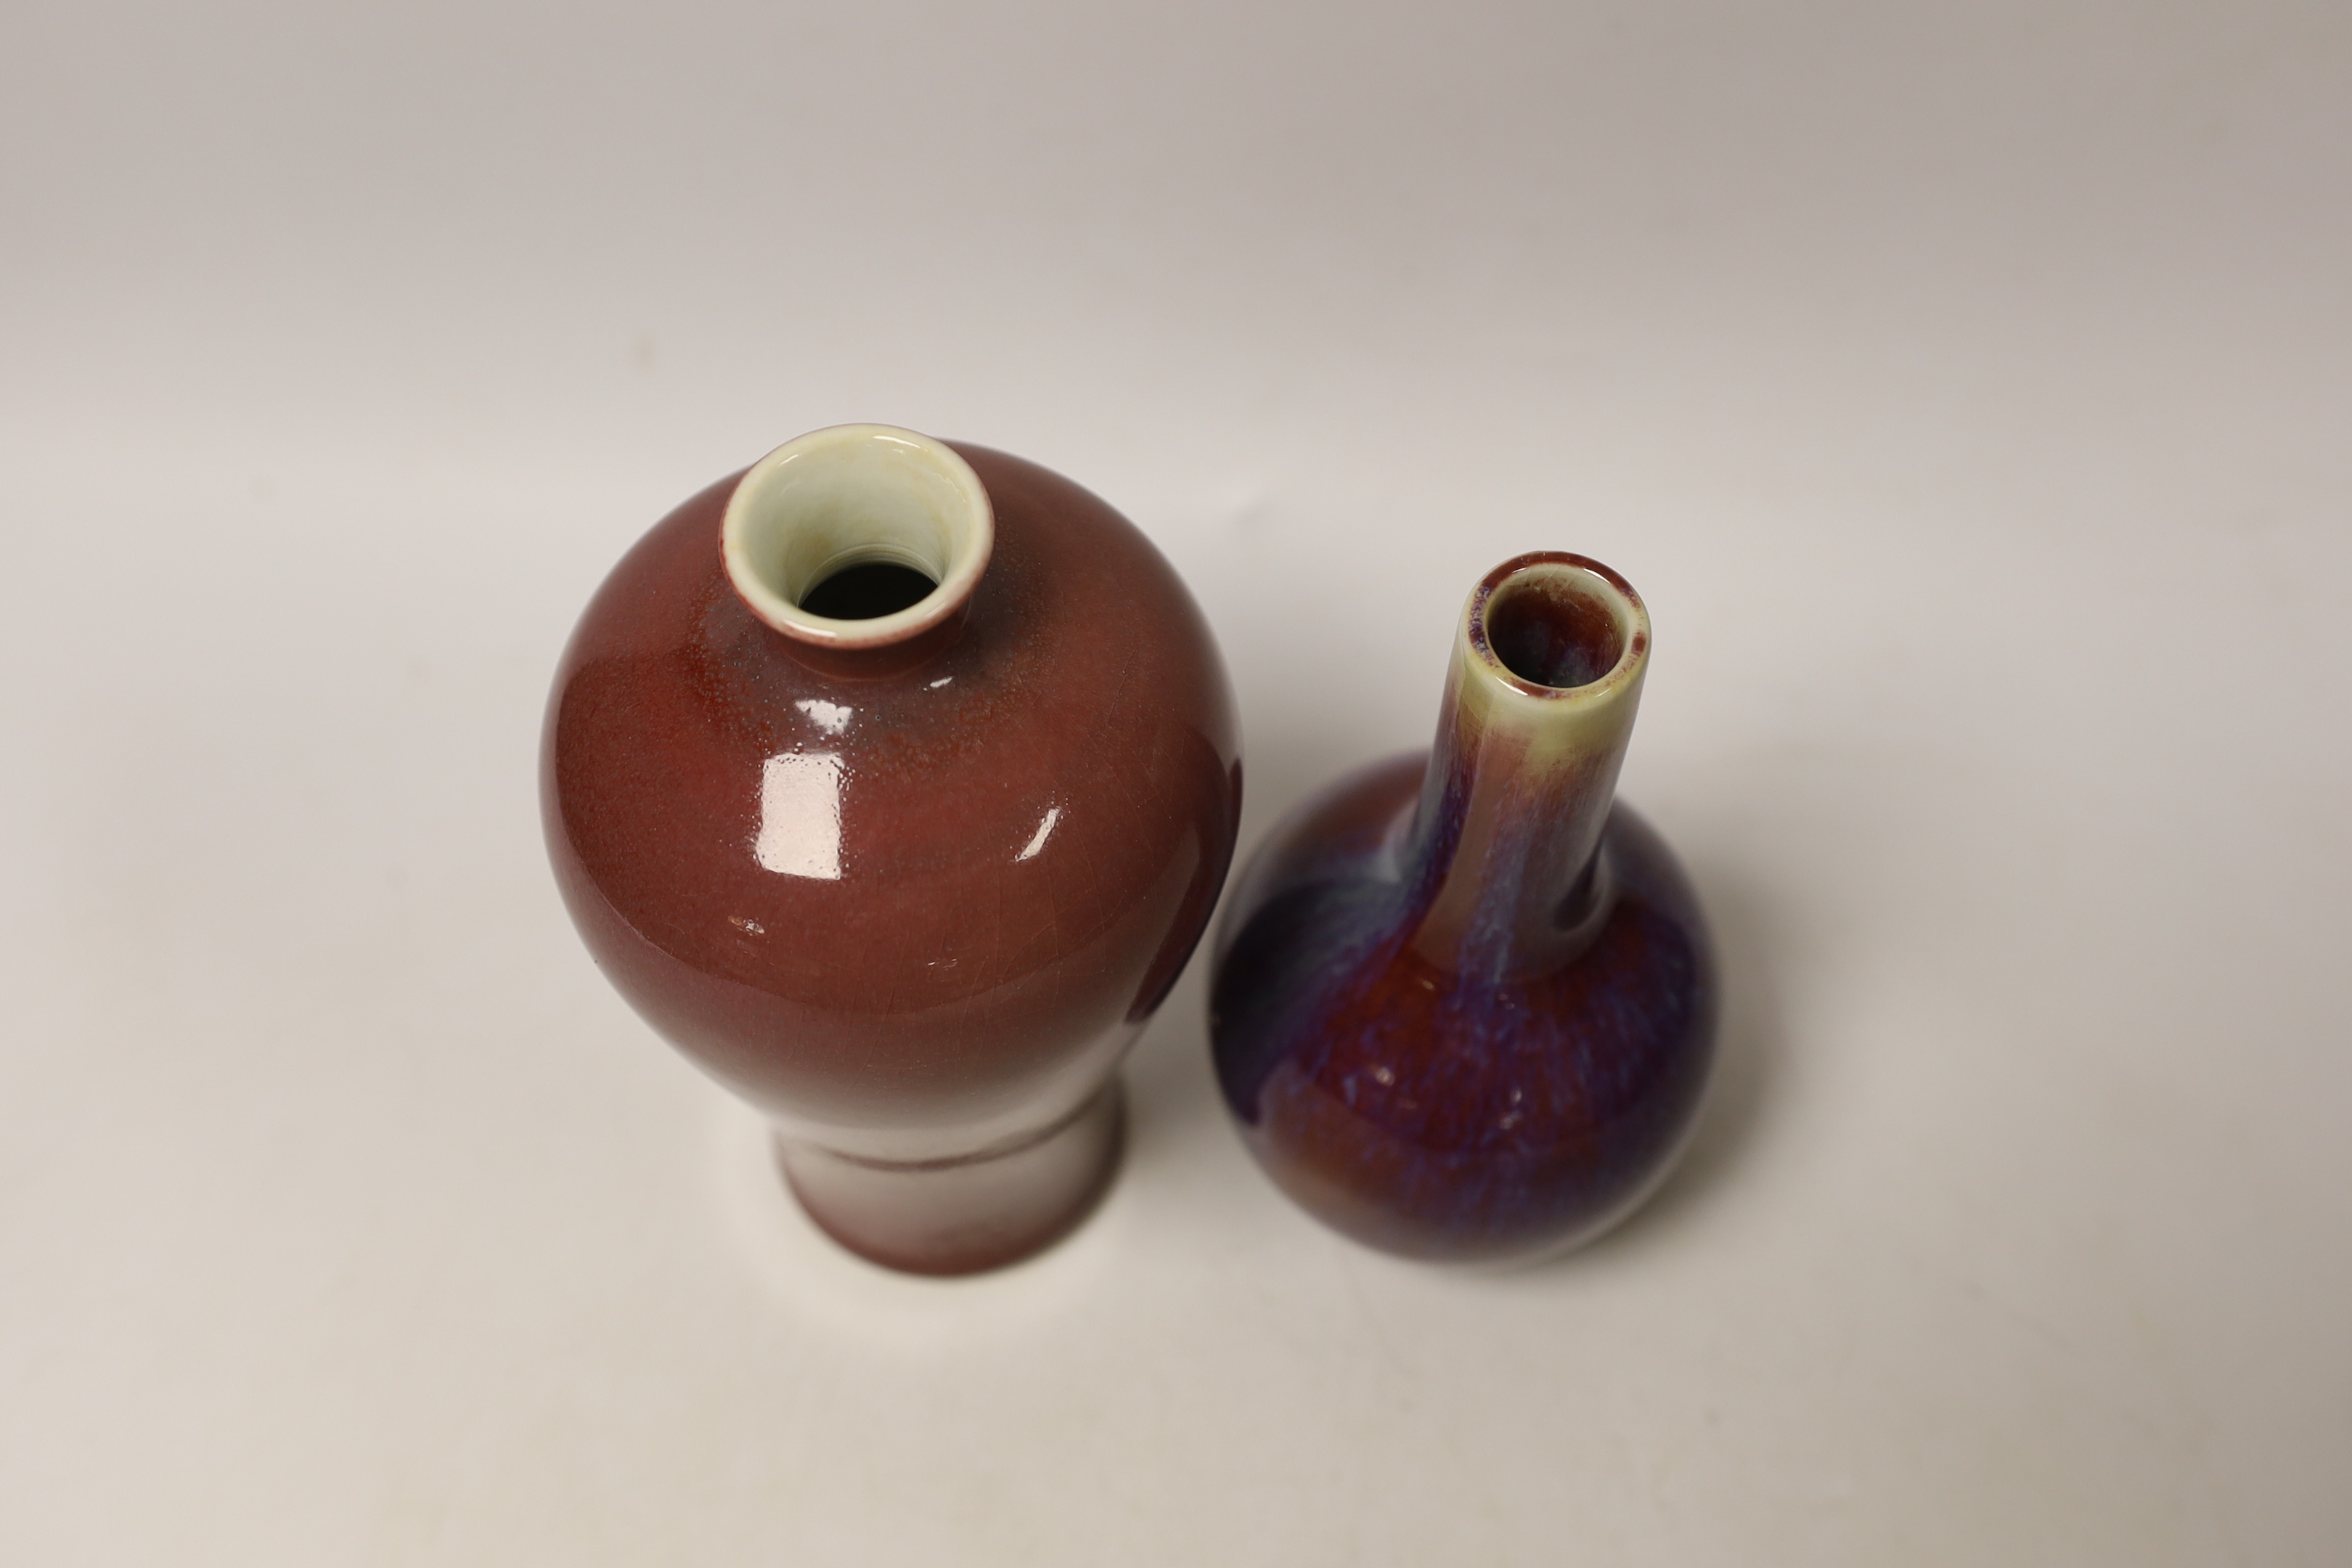 Two Chinese flambe glazed vases, tallest 18cm